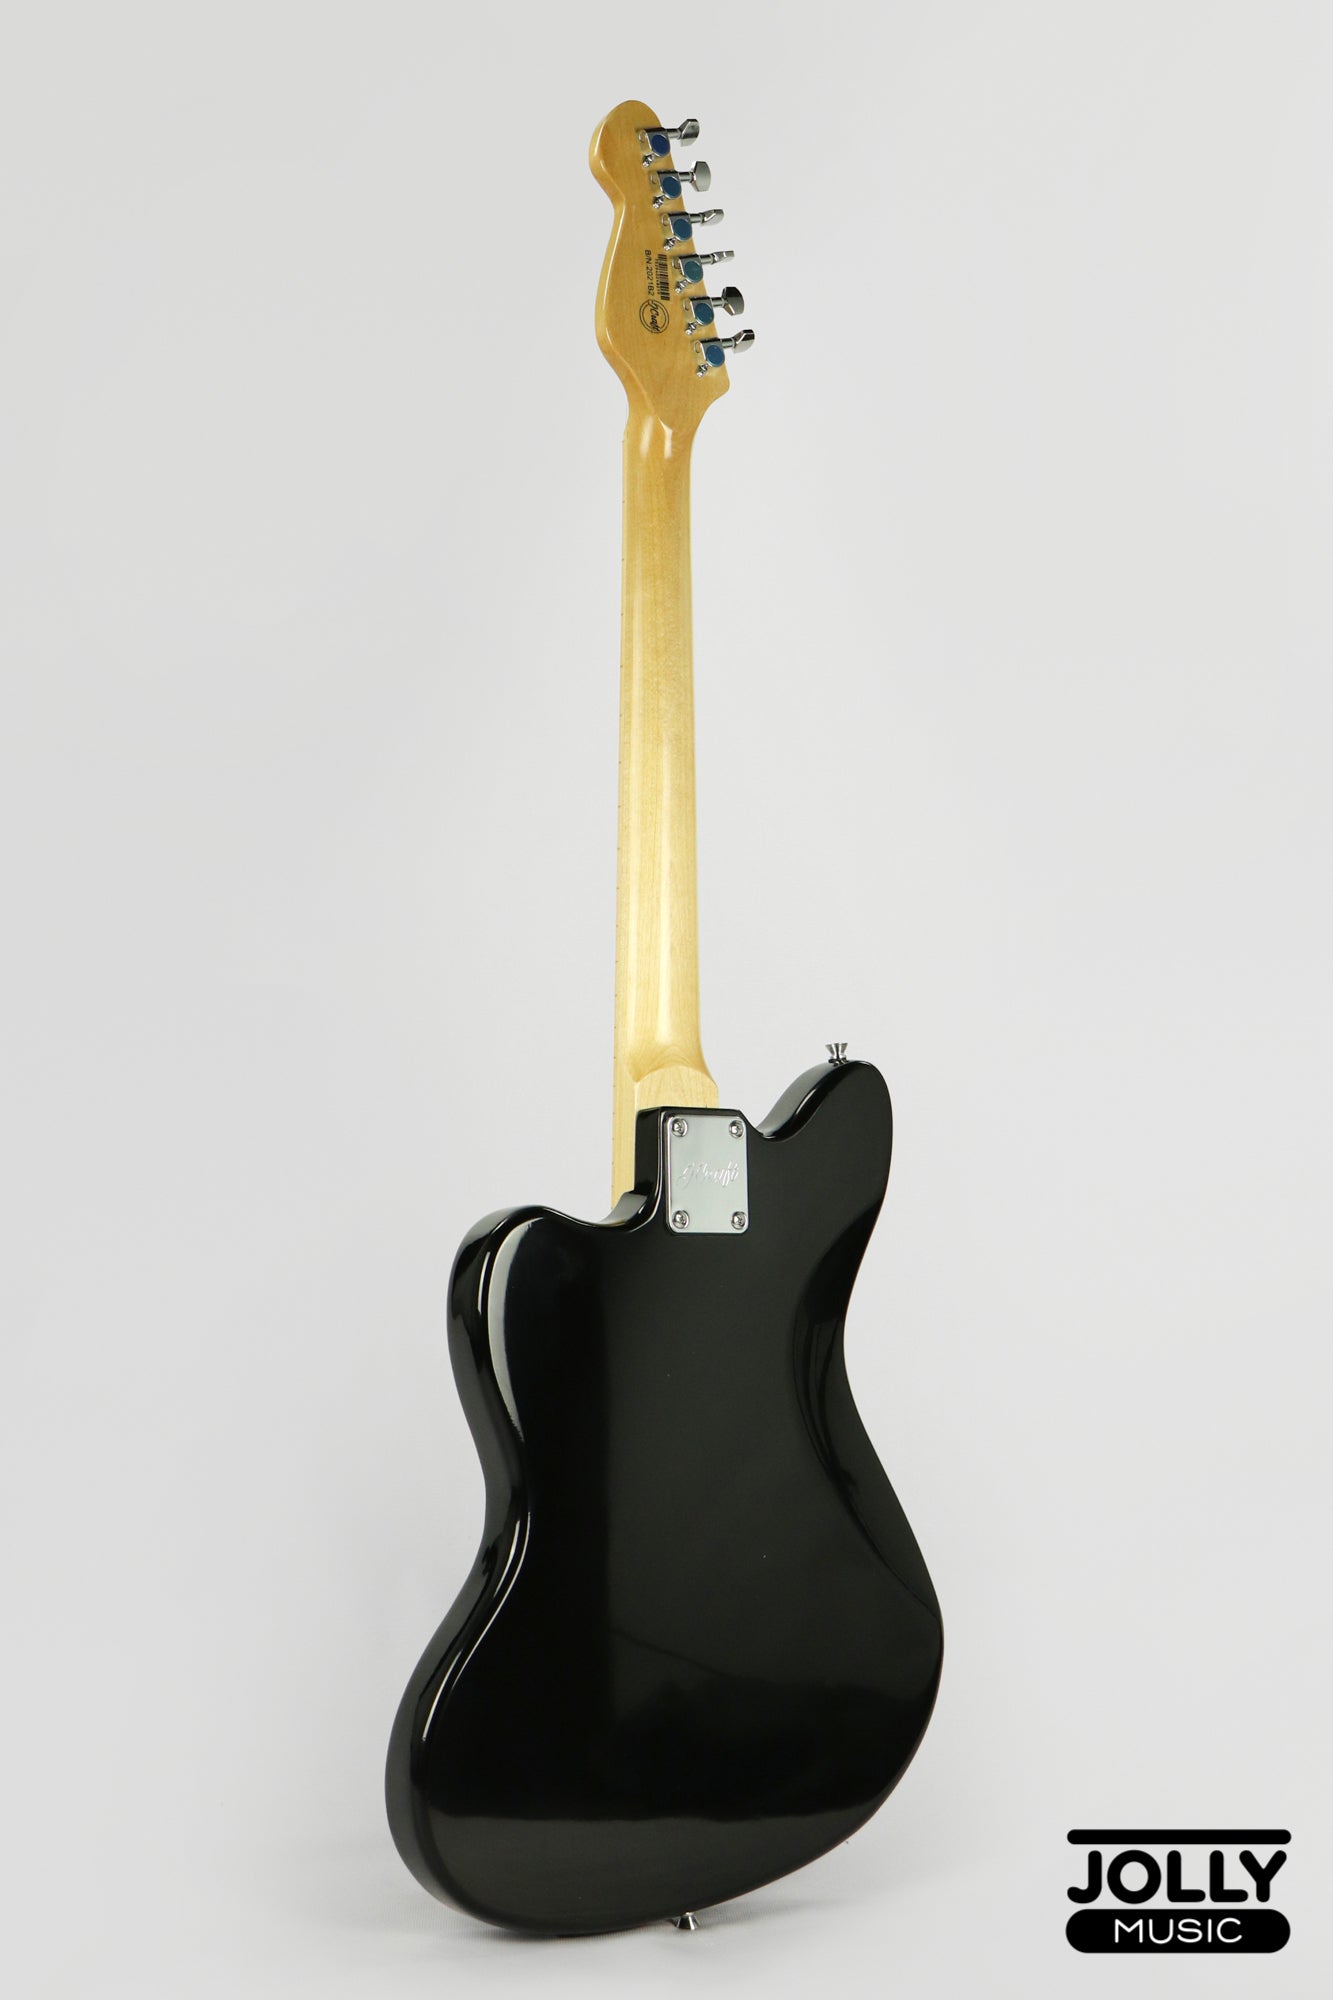 JCraft JZ-1 Offset Electric Guitar - Black